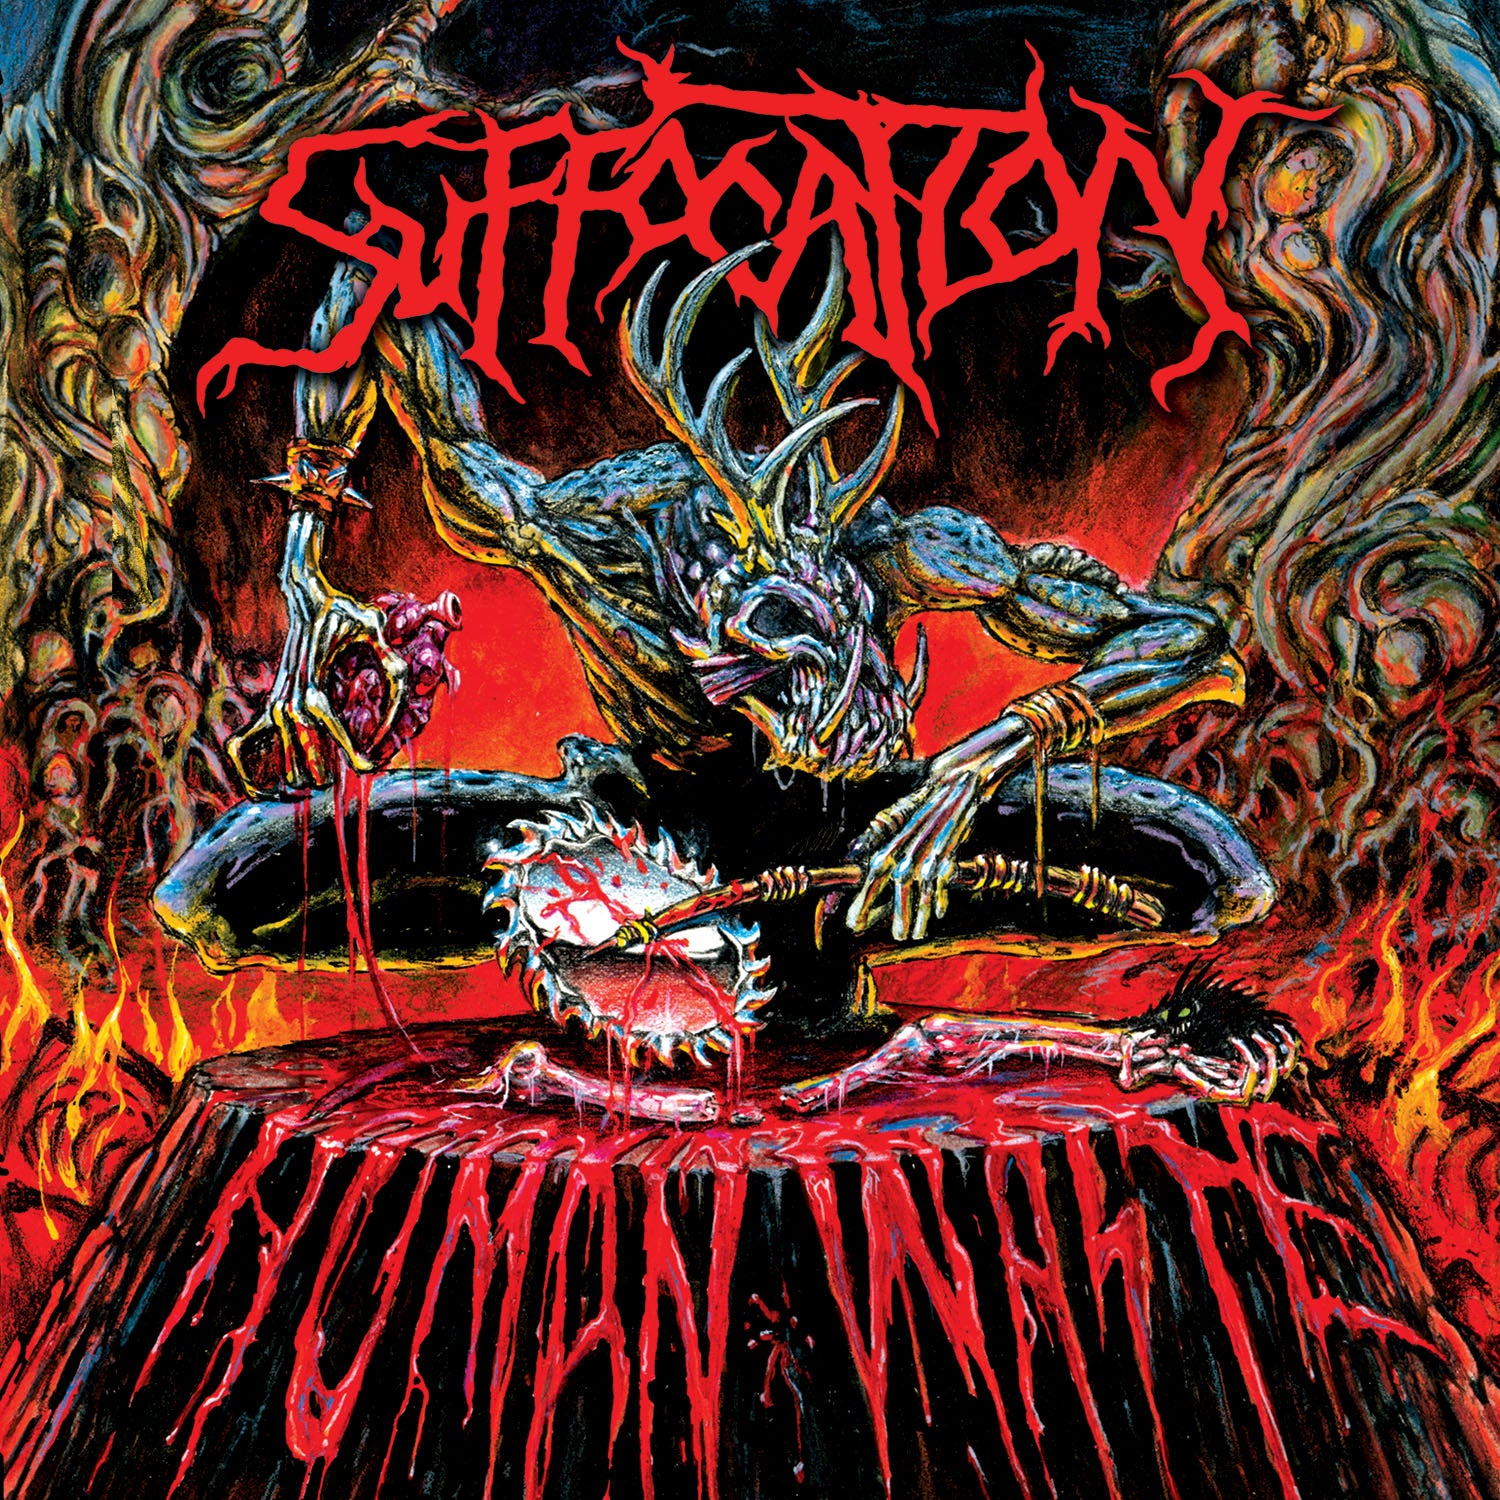 Suffocation "Human Waste (Reissue)" CD